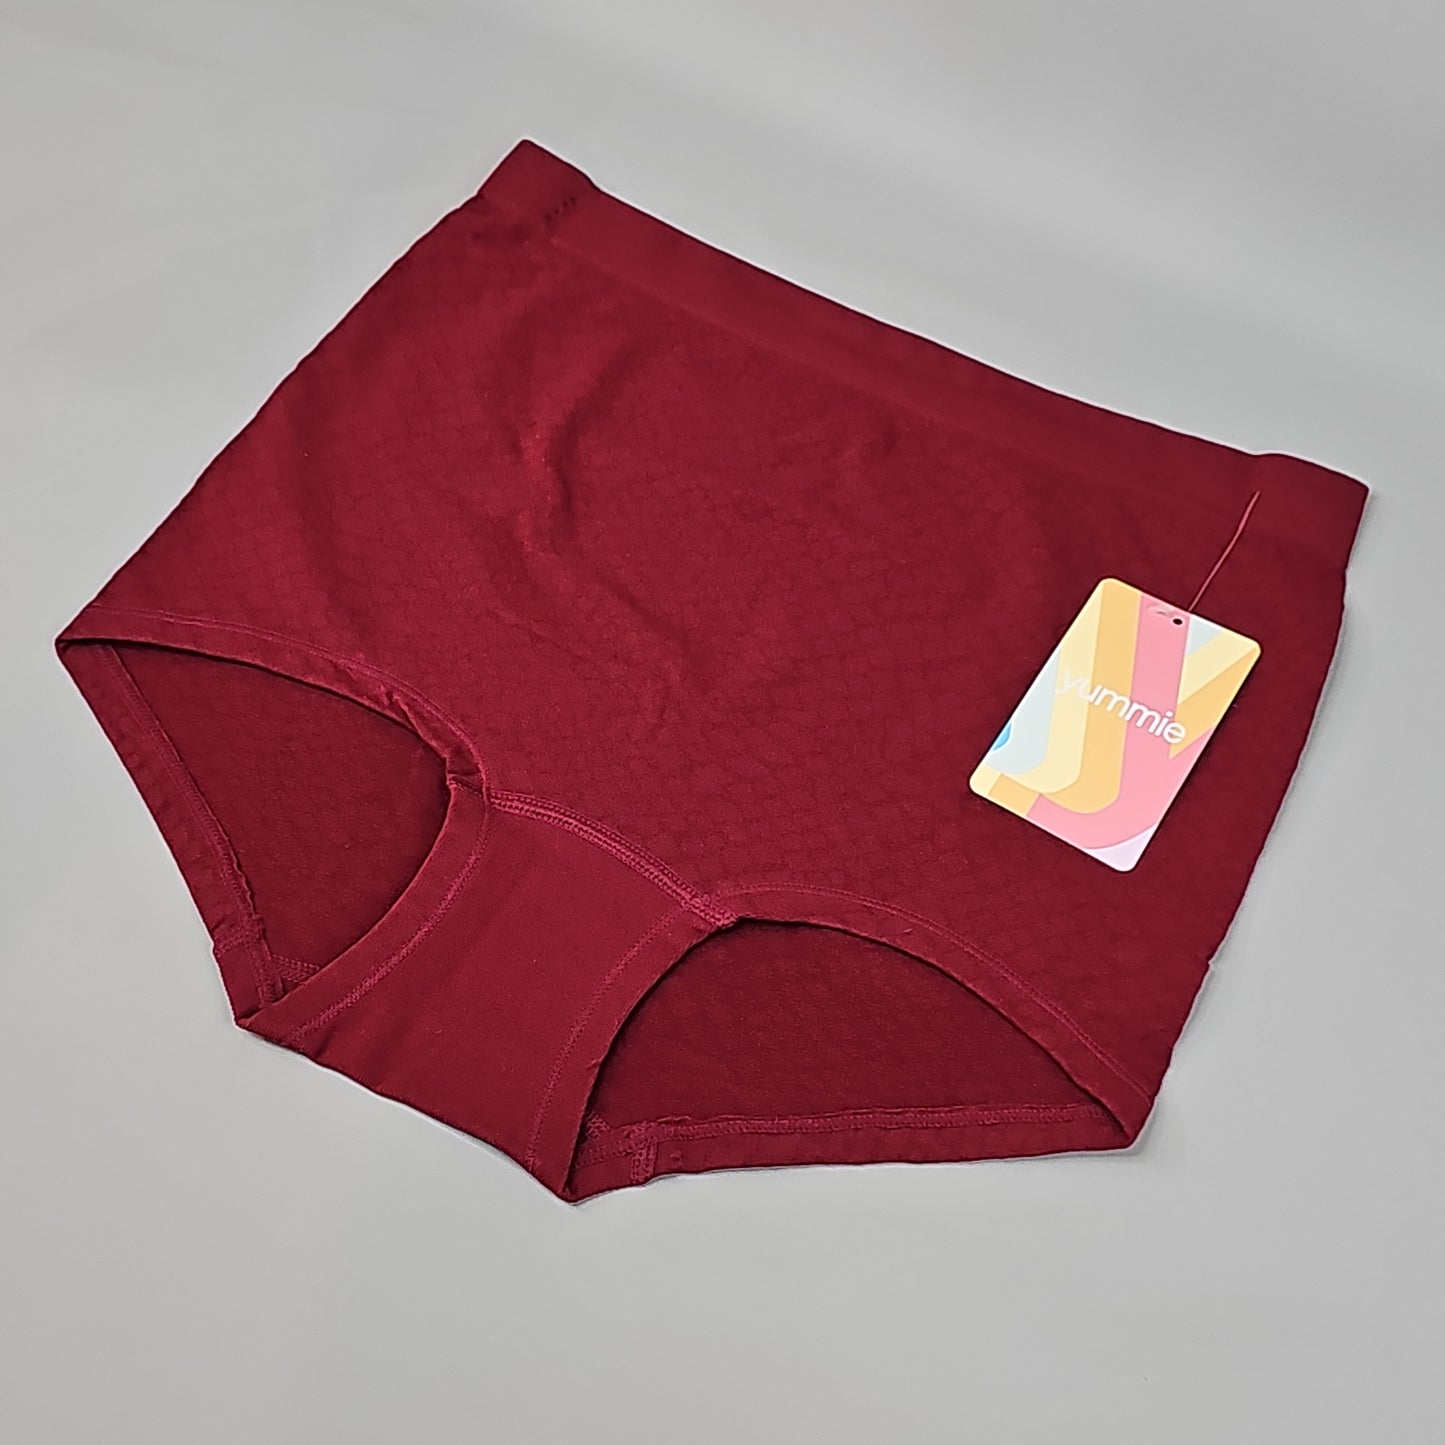 YUMMIE Lexi Mid Waist Girlshort Cabernet Women's Underwear Sz M/L Black YT5-306-CAB-M/L (New)